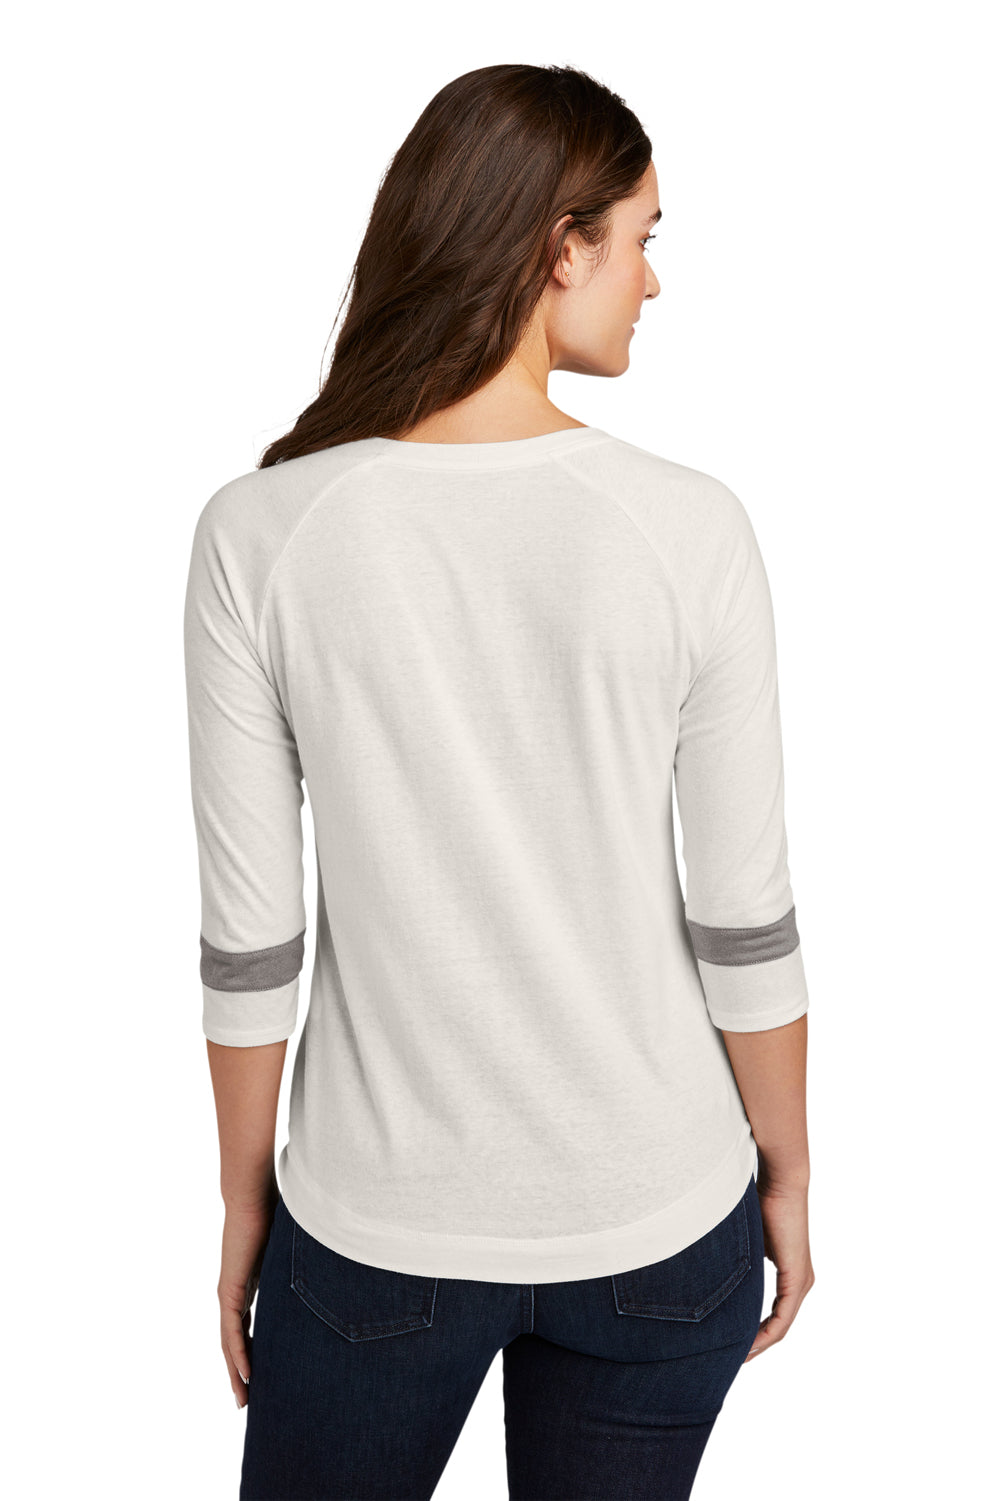 New Era Womens 3/4 Sleeve Crewneck T-Shirt White/Shadow Grey Side